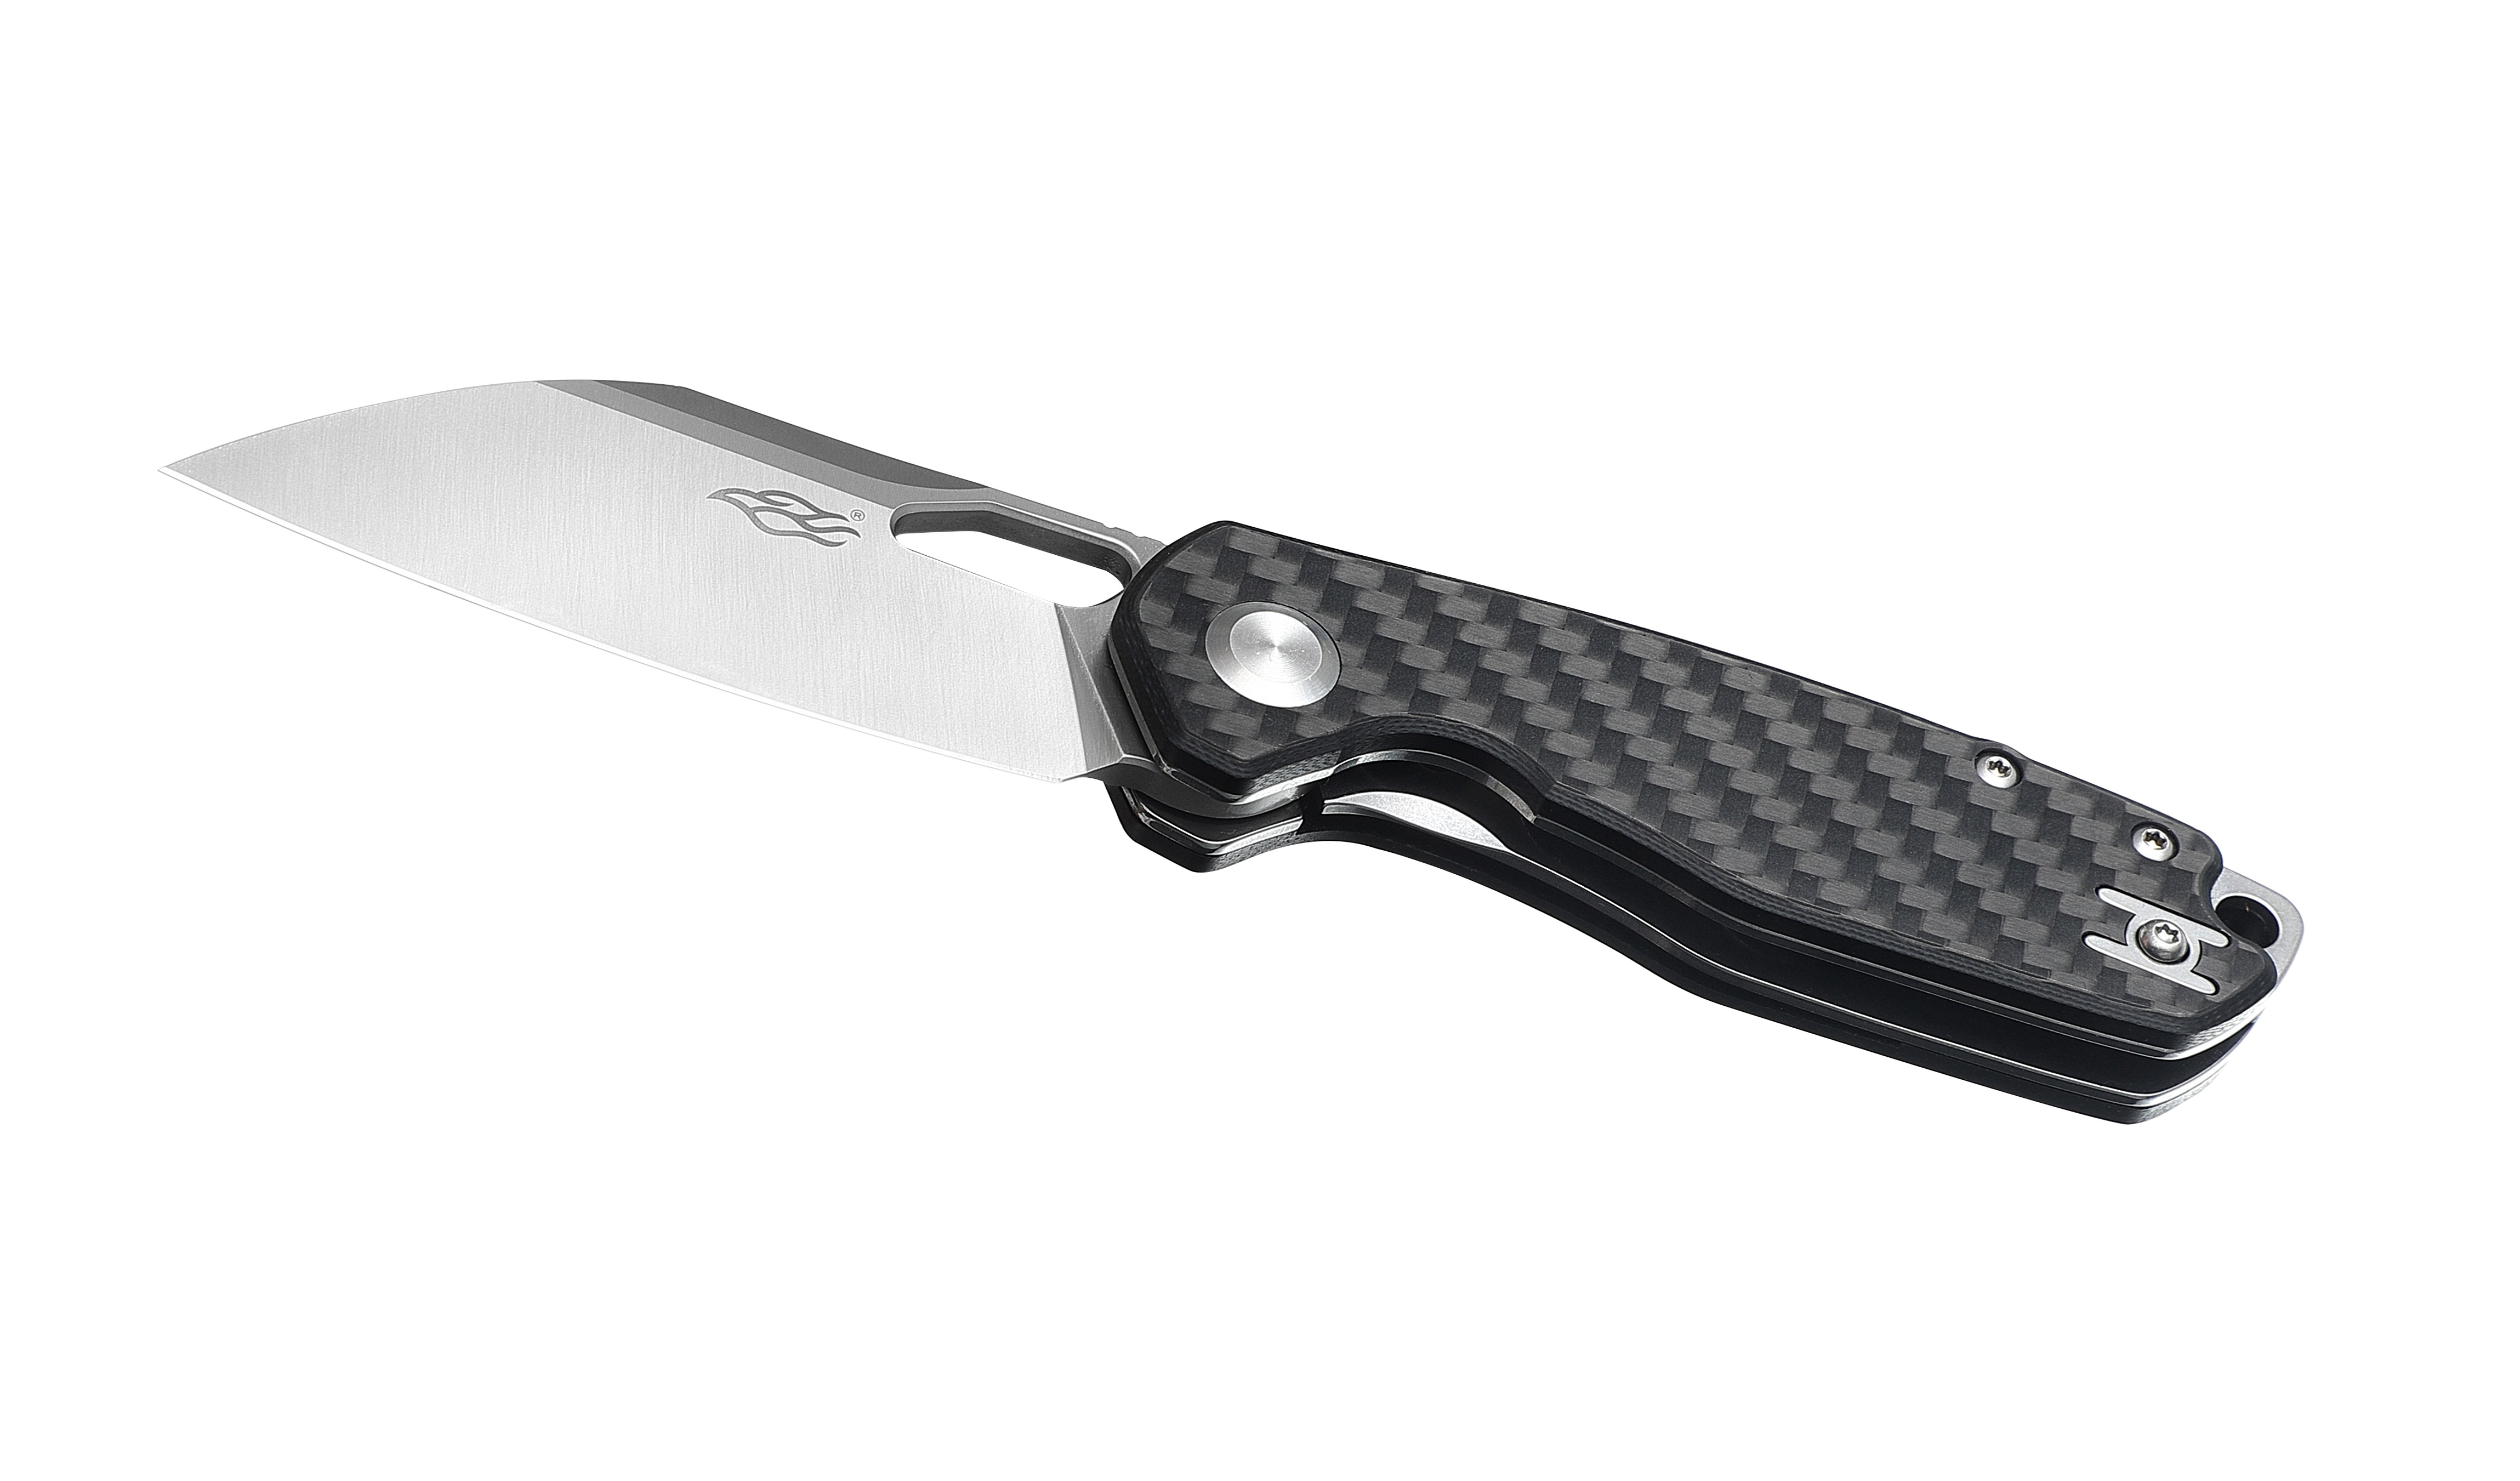 GAF7551BK Ganzo Firebird G-Lock Pocket Knife Black